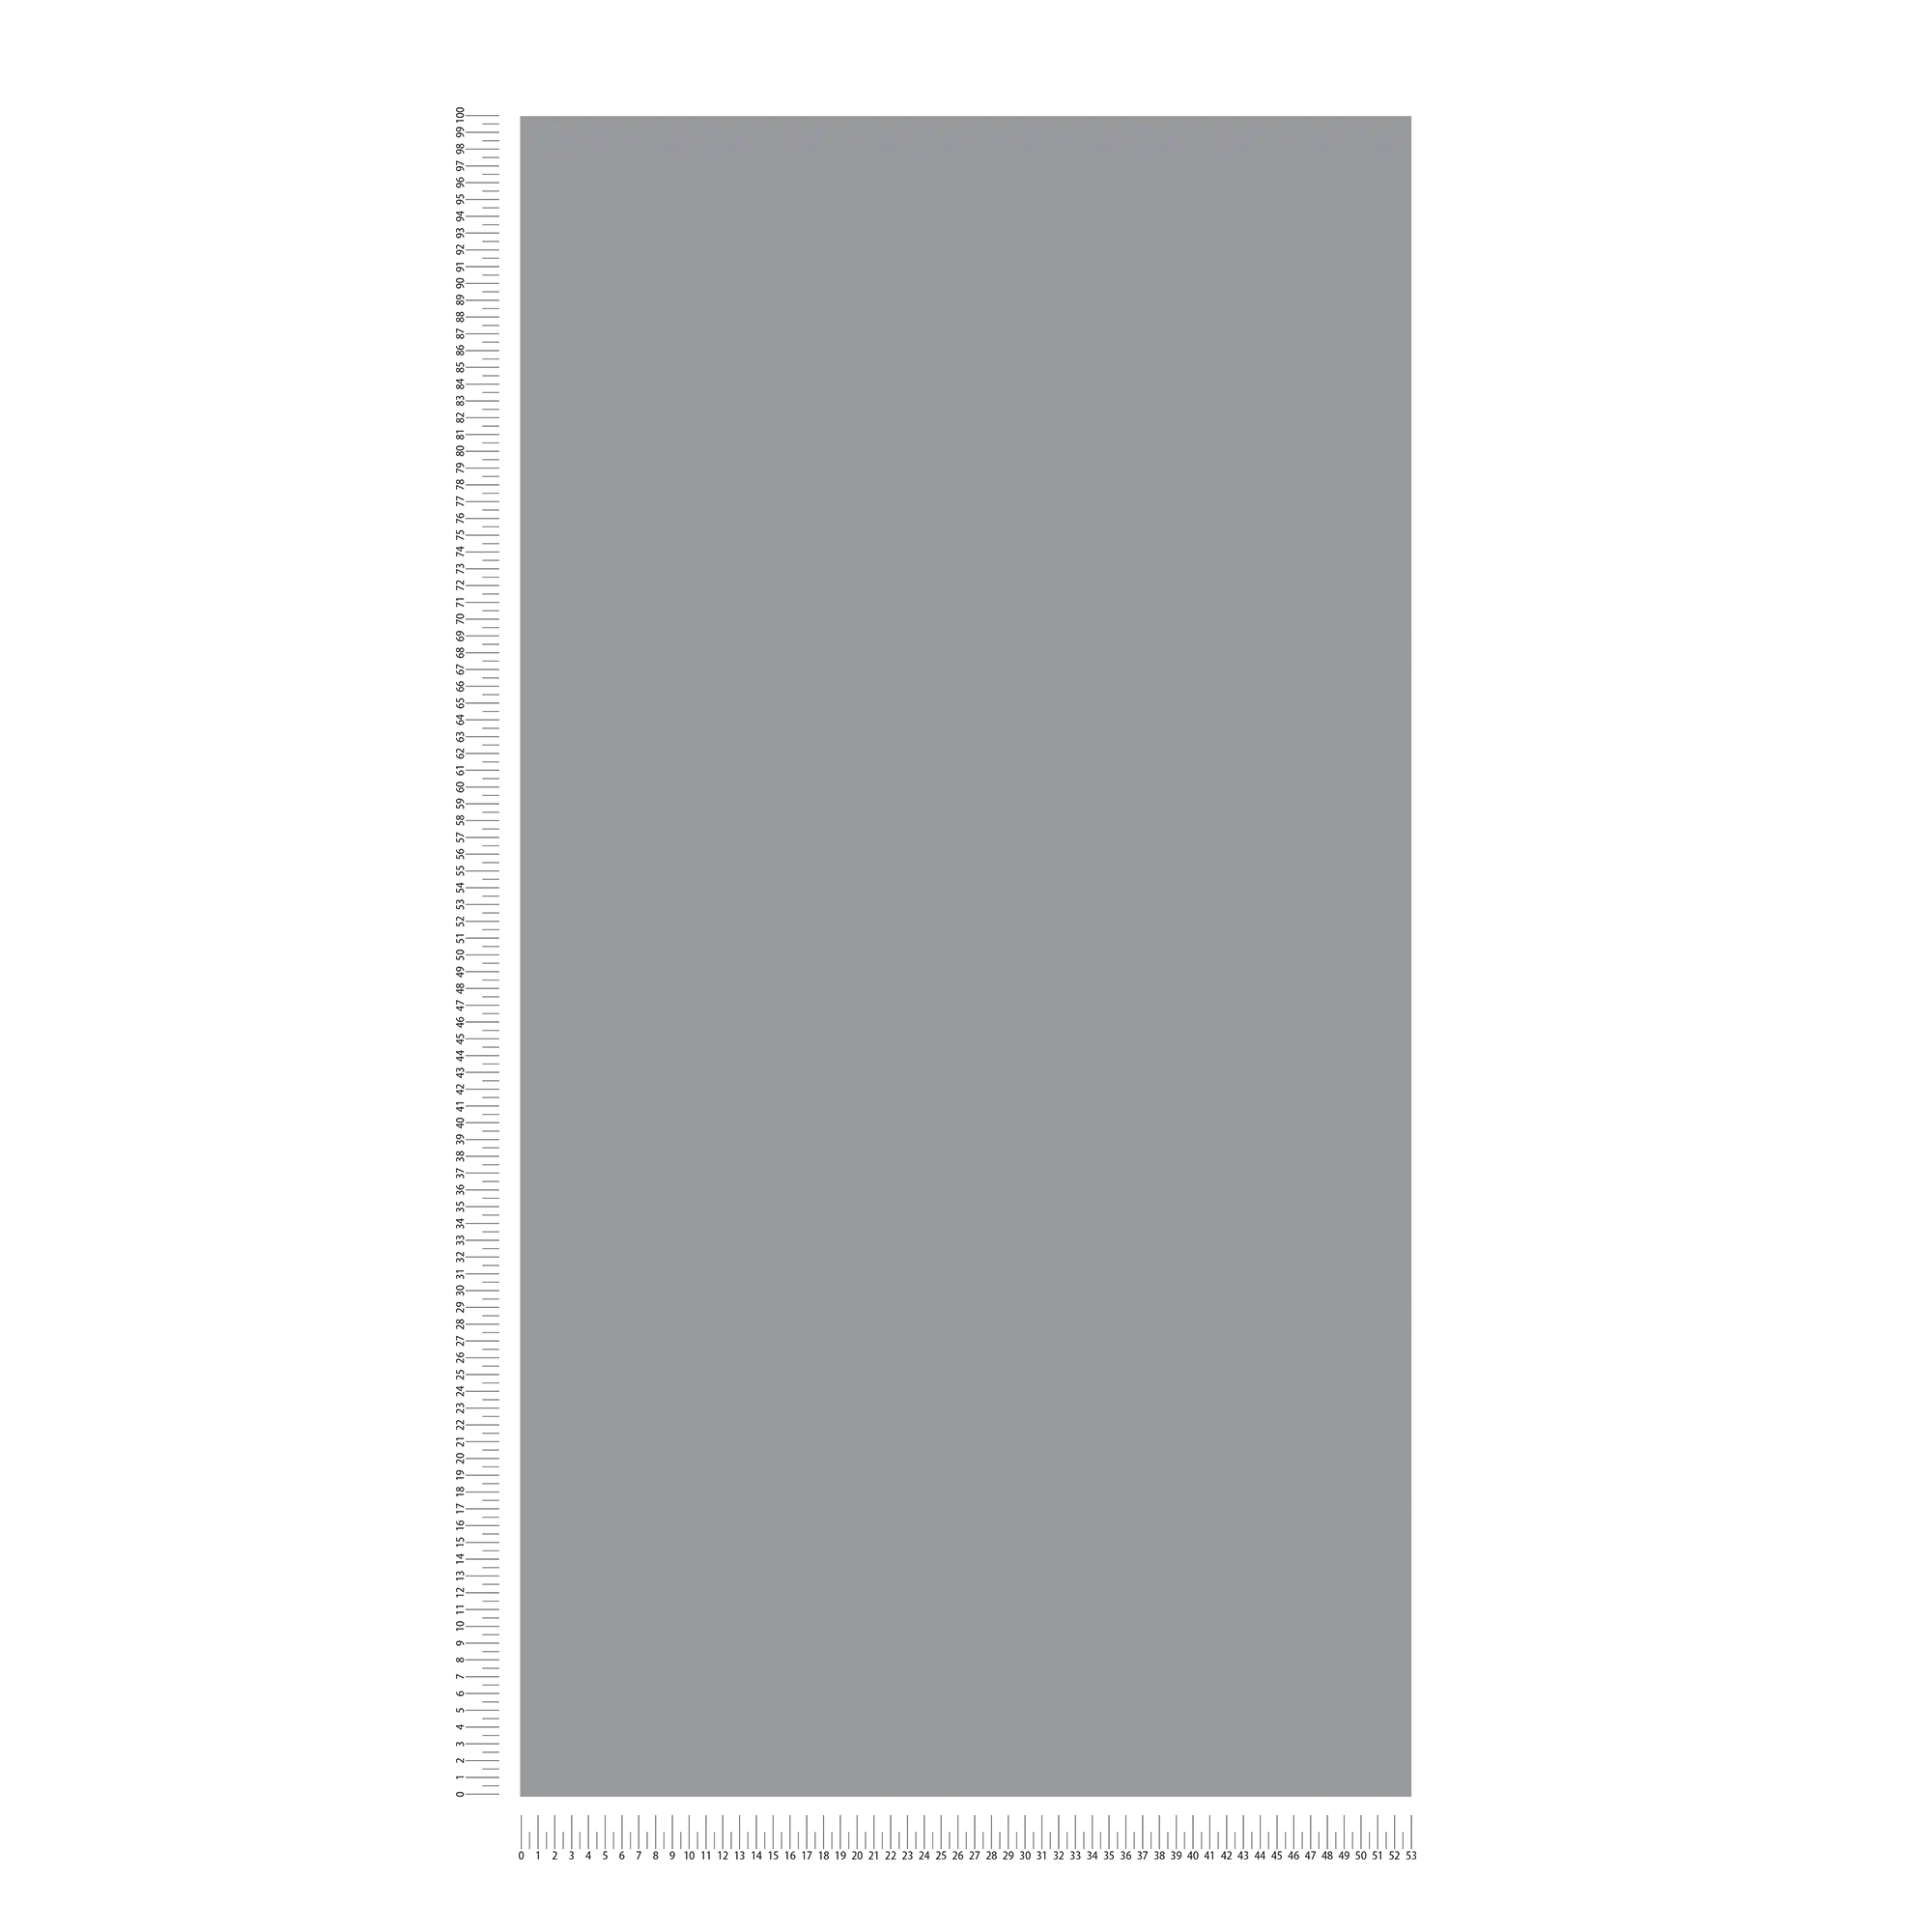             Carta da parati in tessuto non tessuto grigio acciaio liscio e opaco - grigio
        